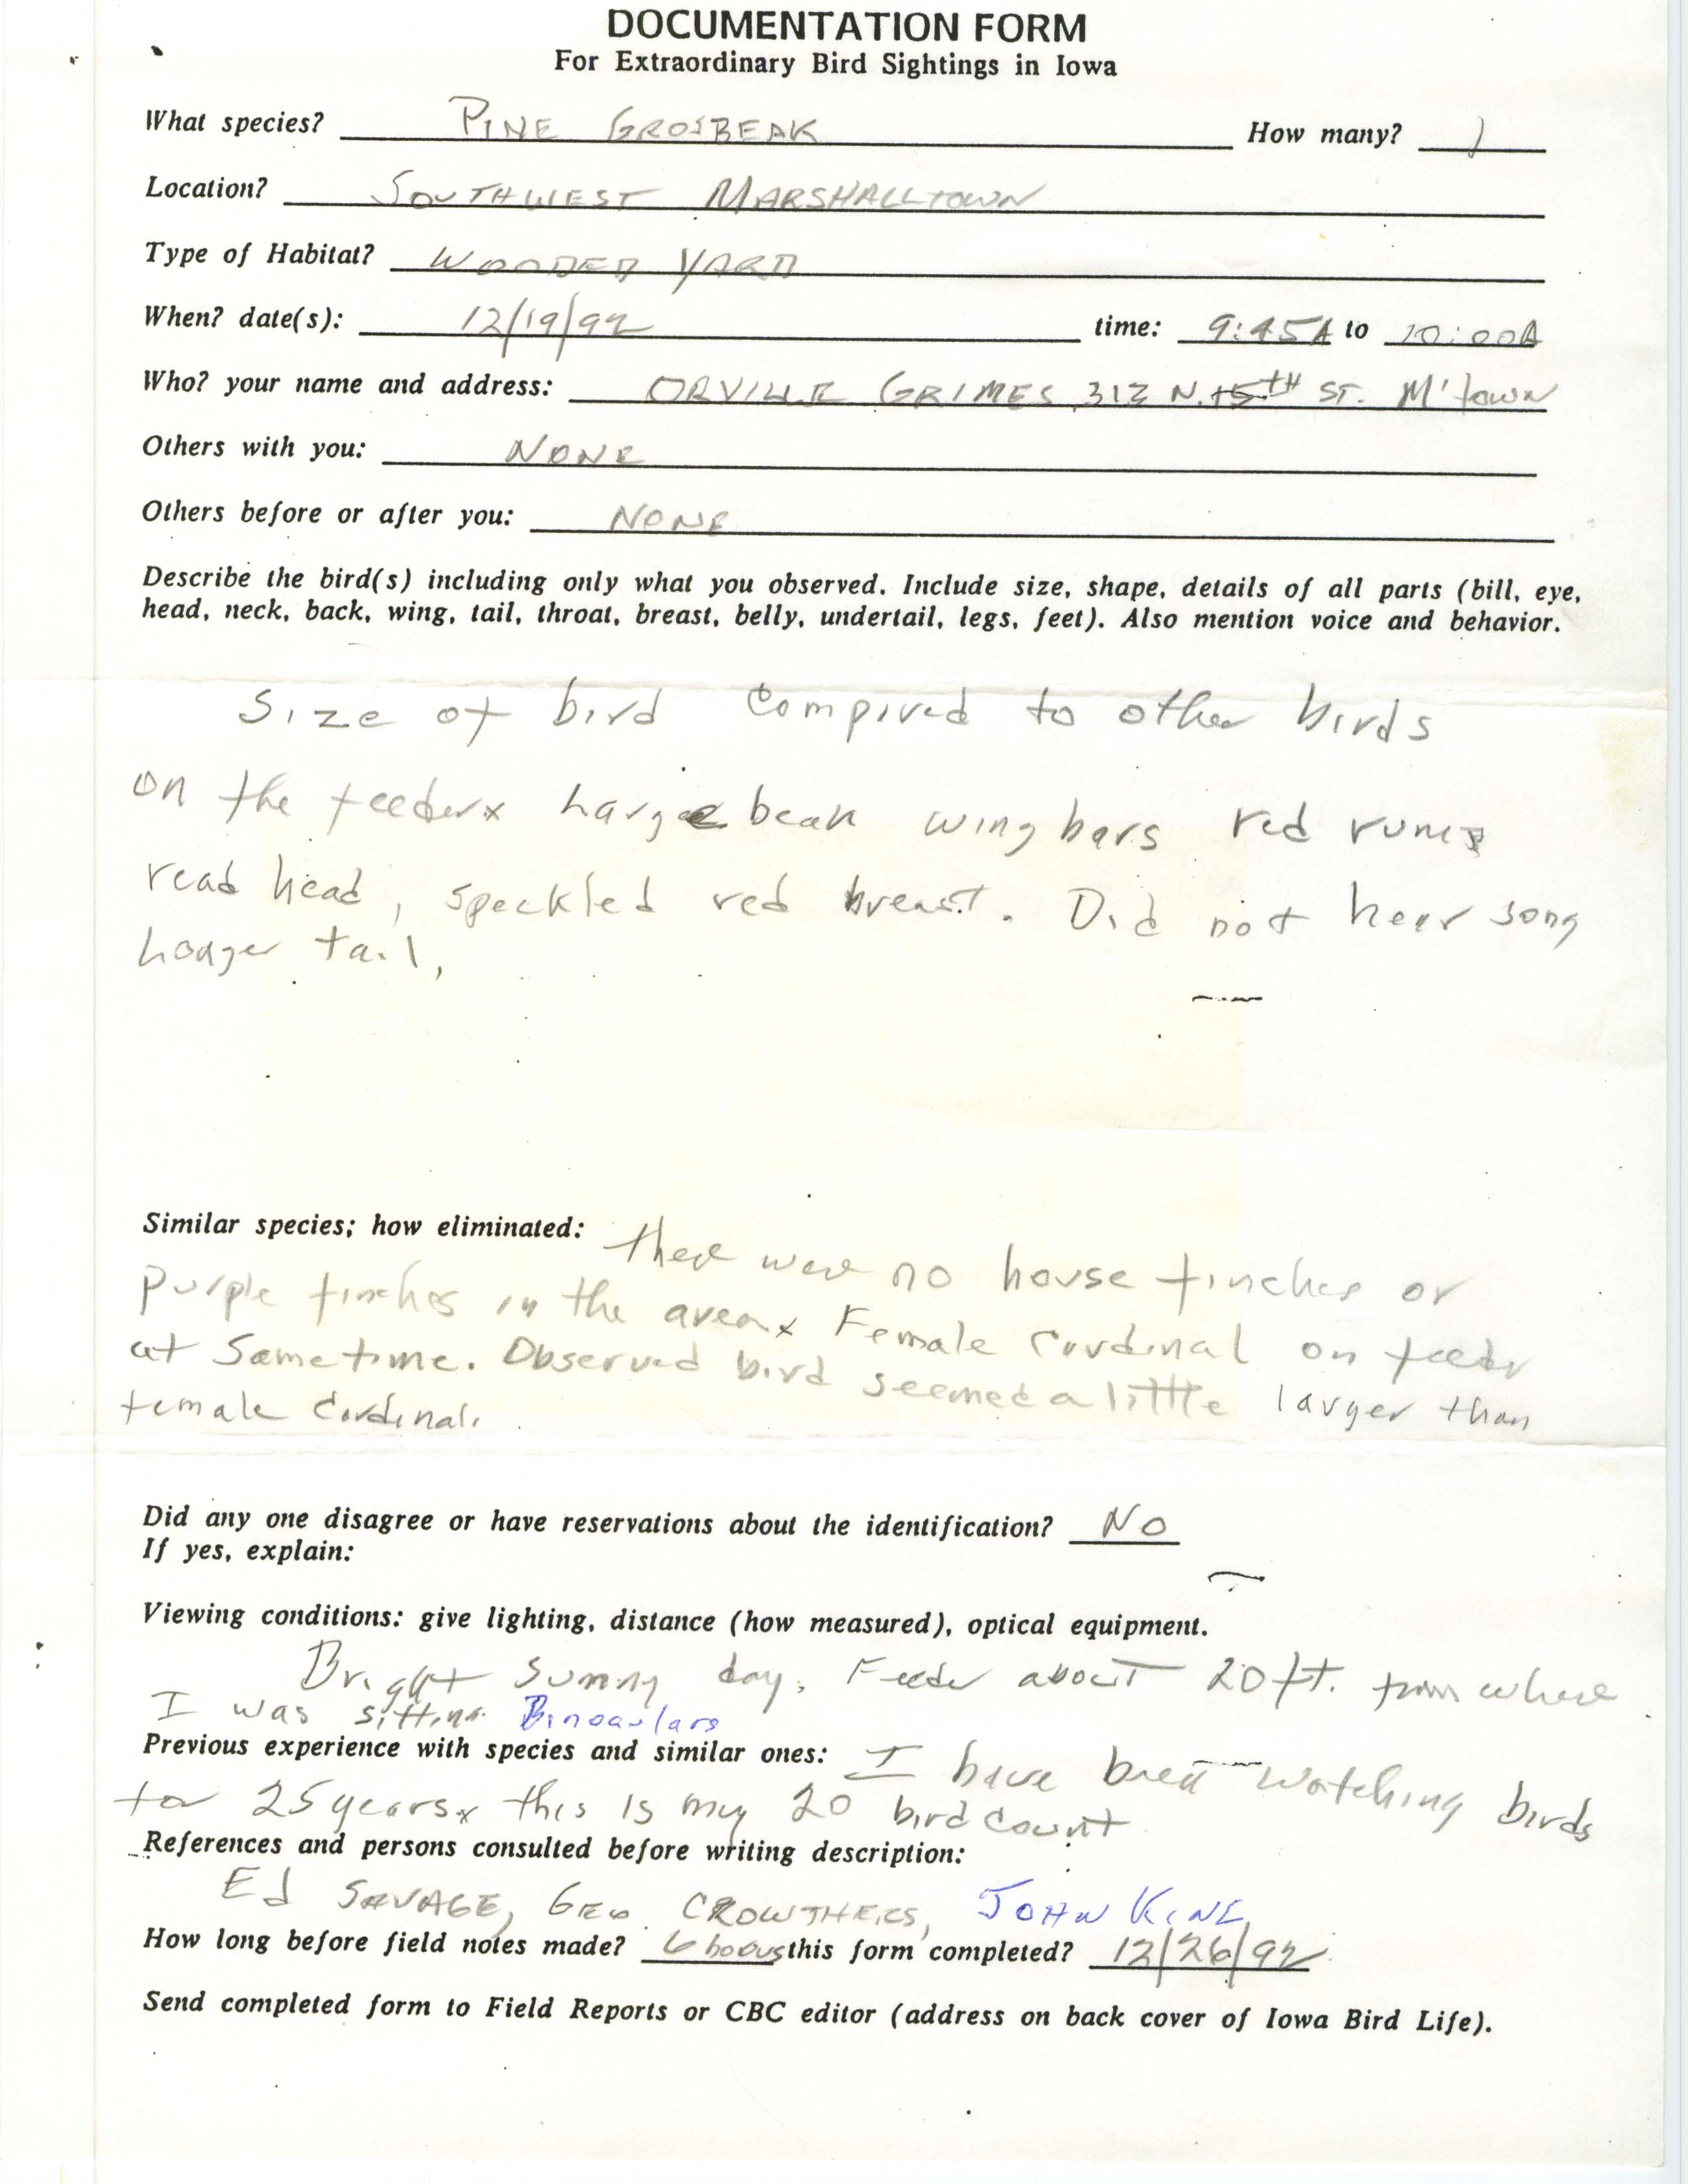 Rare bird documentation form for Pine Grosbeak at Marshalltown, 1992